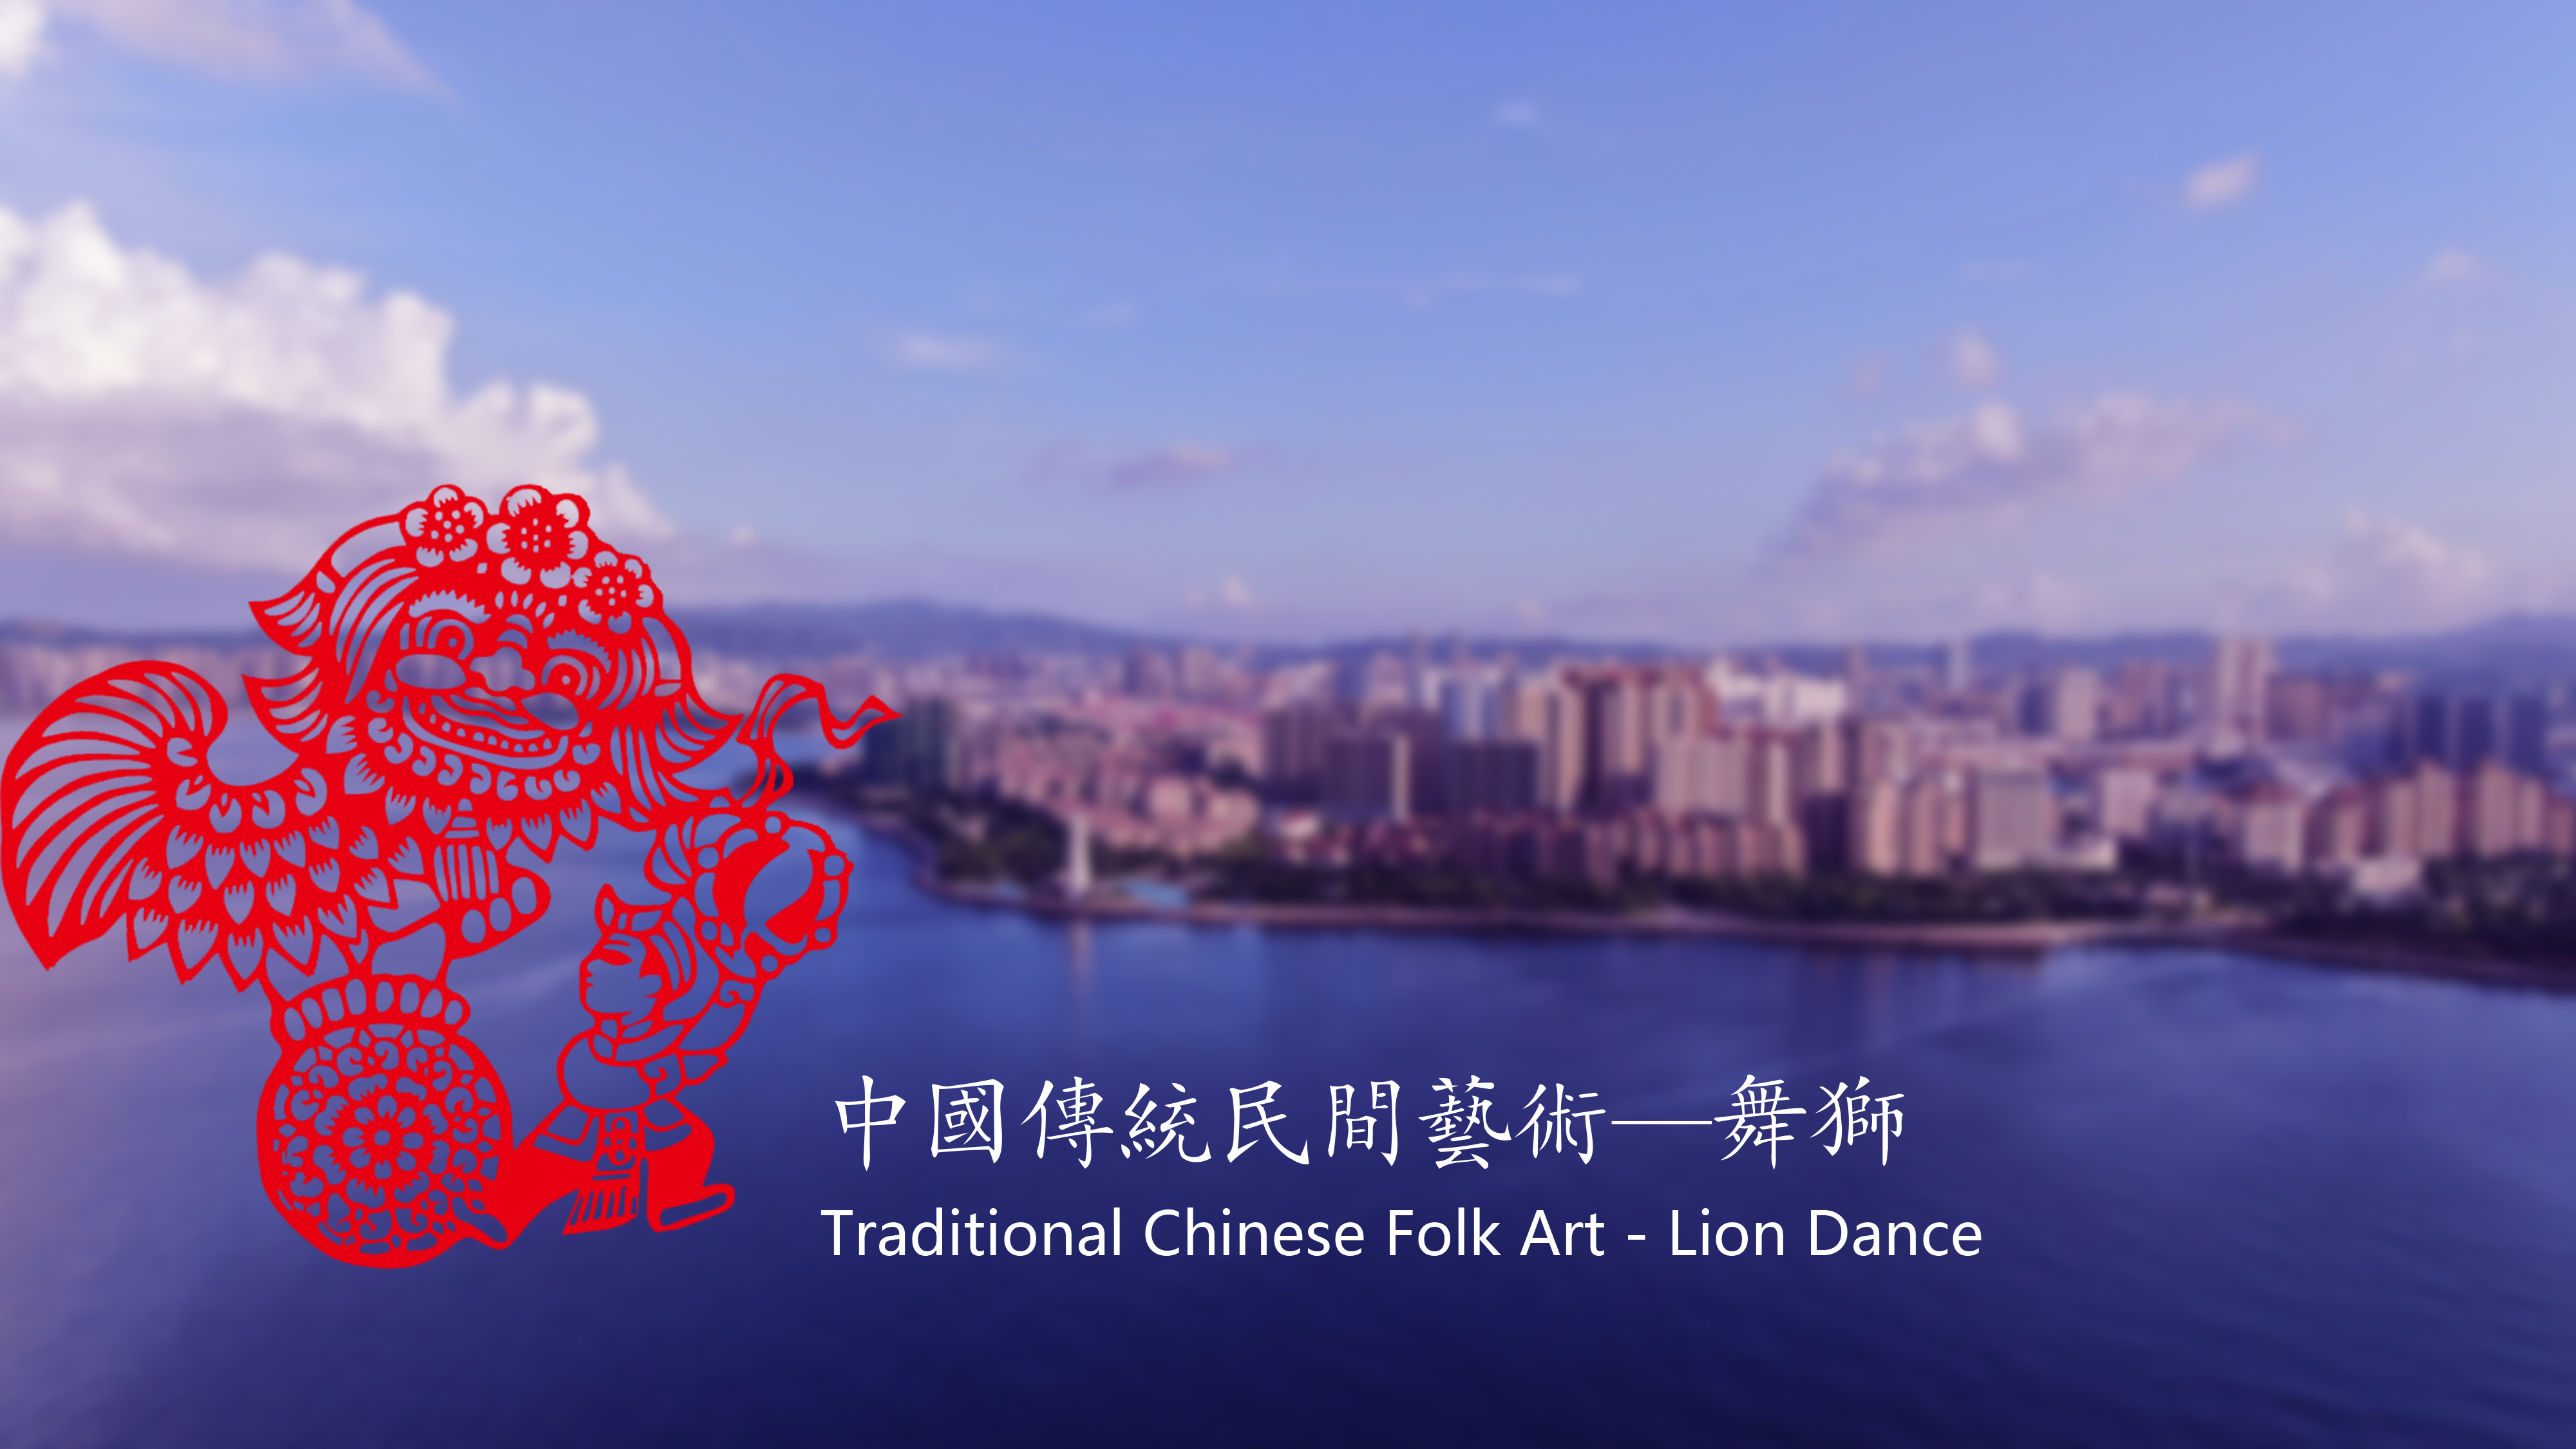 Traditional Chinese Folk Art - Lion Dance